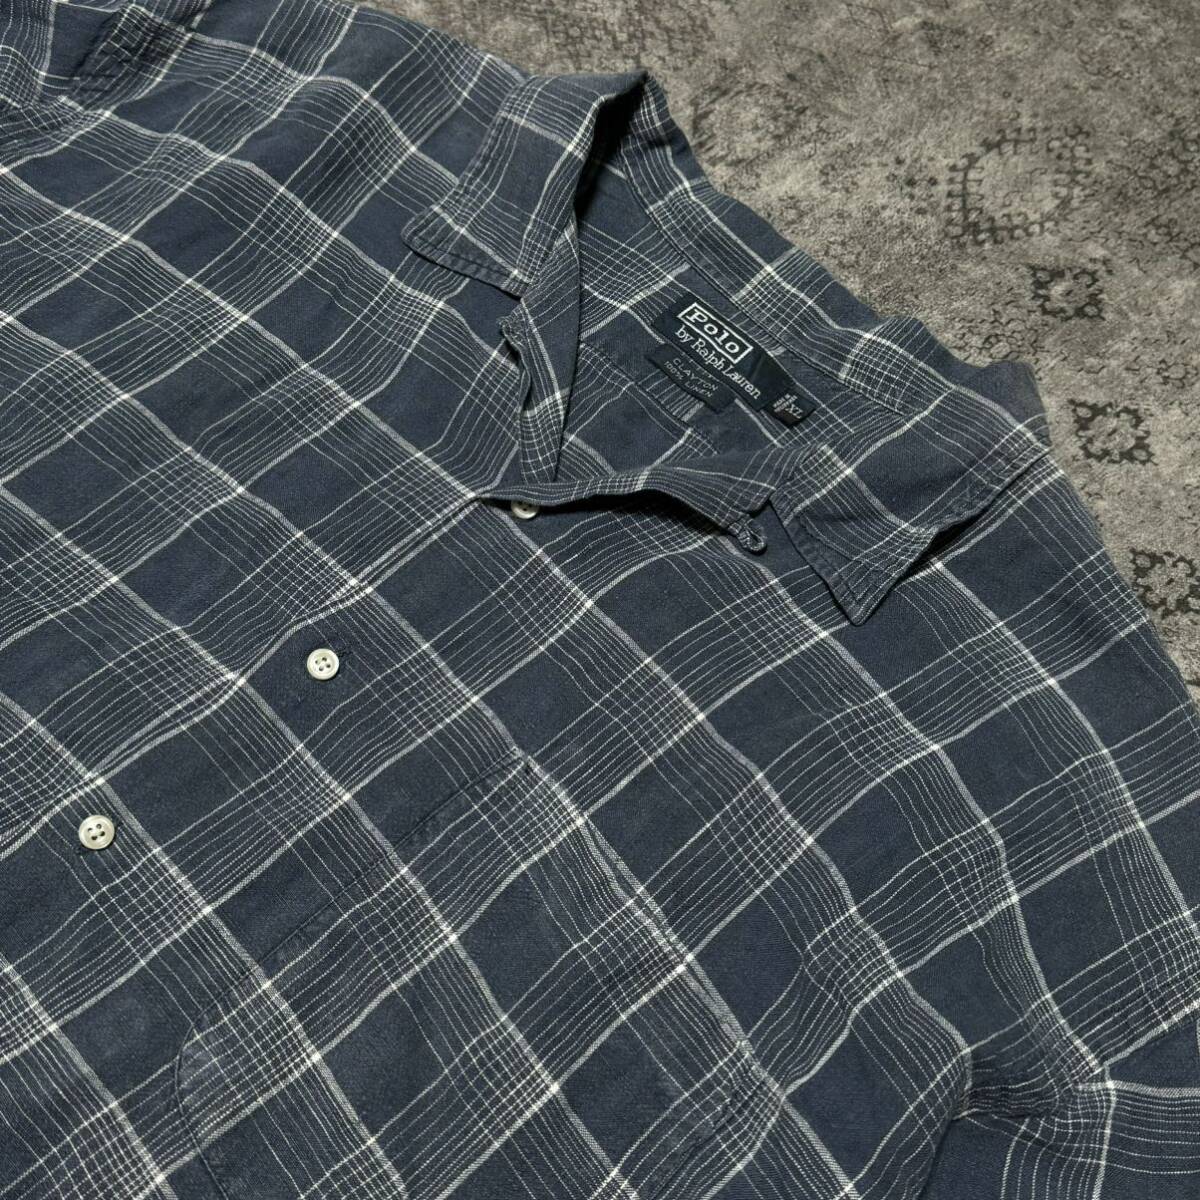 90s POLO Ralph Louren CLAYTON Ralph Lauren k Ray тонн linen рубашка с коротким рукавом проверка открытый цвет . воротник 90 годы Vintage 